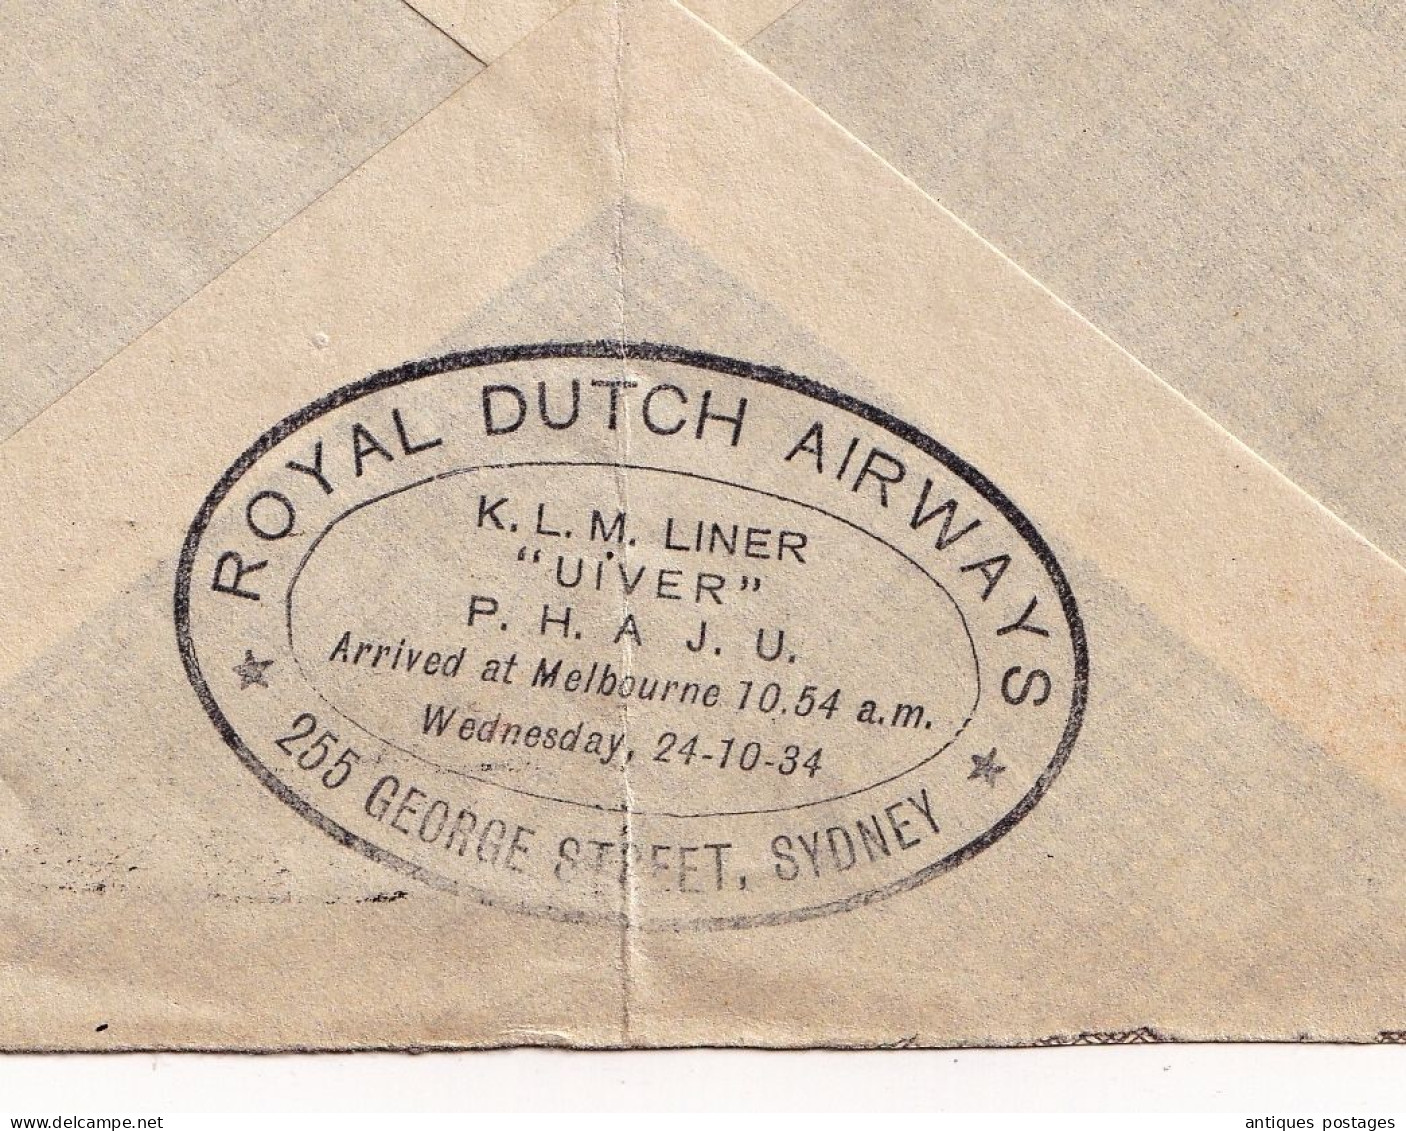 Sydney 1934 Australie Australia Royal Dutch Air Lines Airways Amsterdam Holland K.L.M. Liner " Uiver " P.H.A.J.U. - Storia Postale